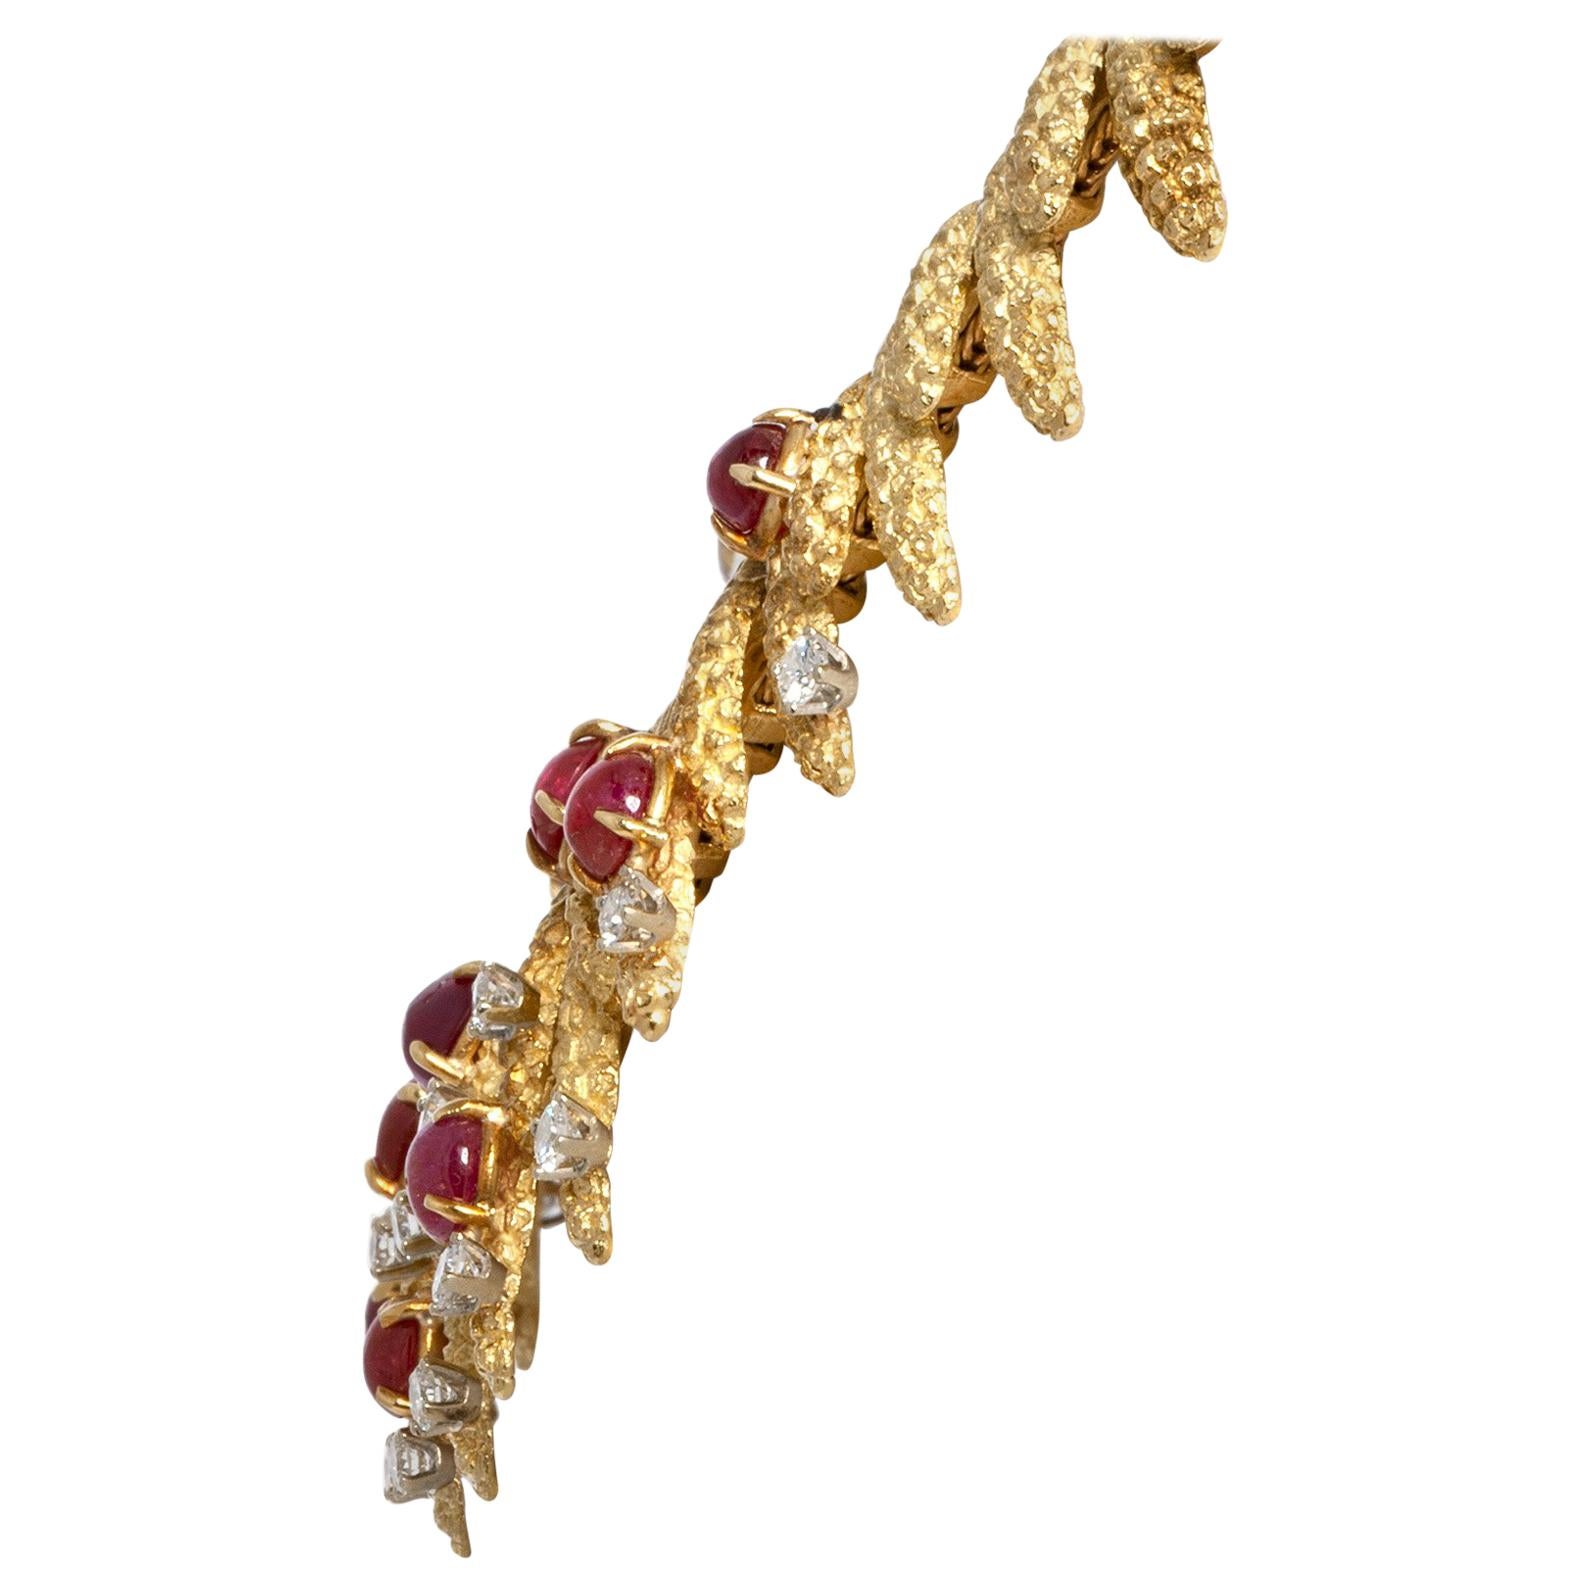 1 pavan gold necklace designs